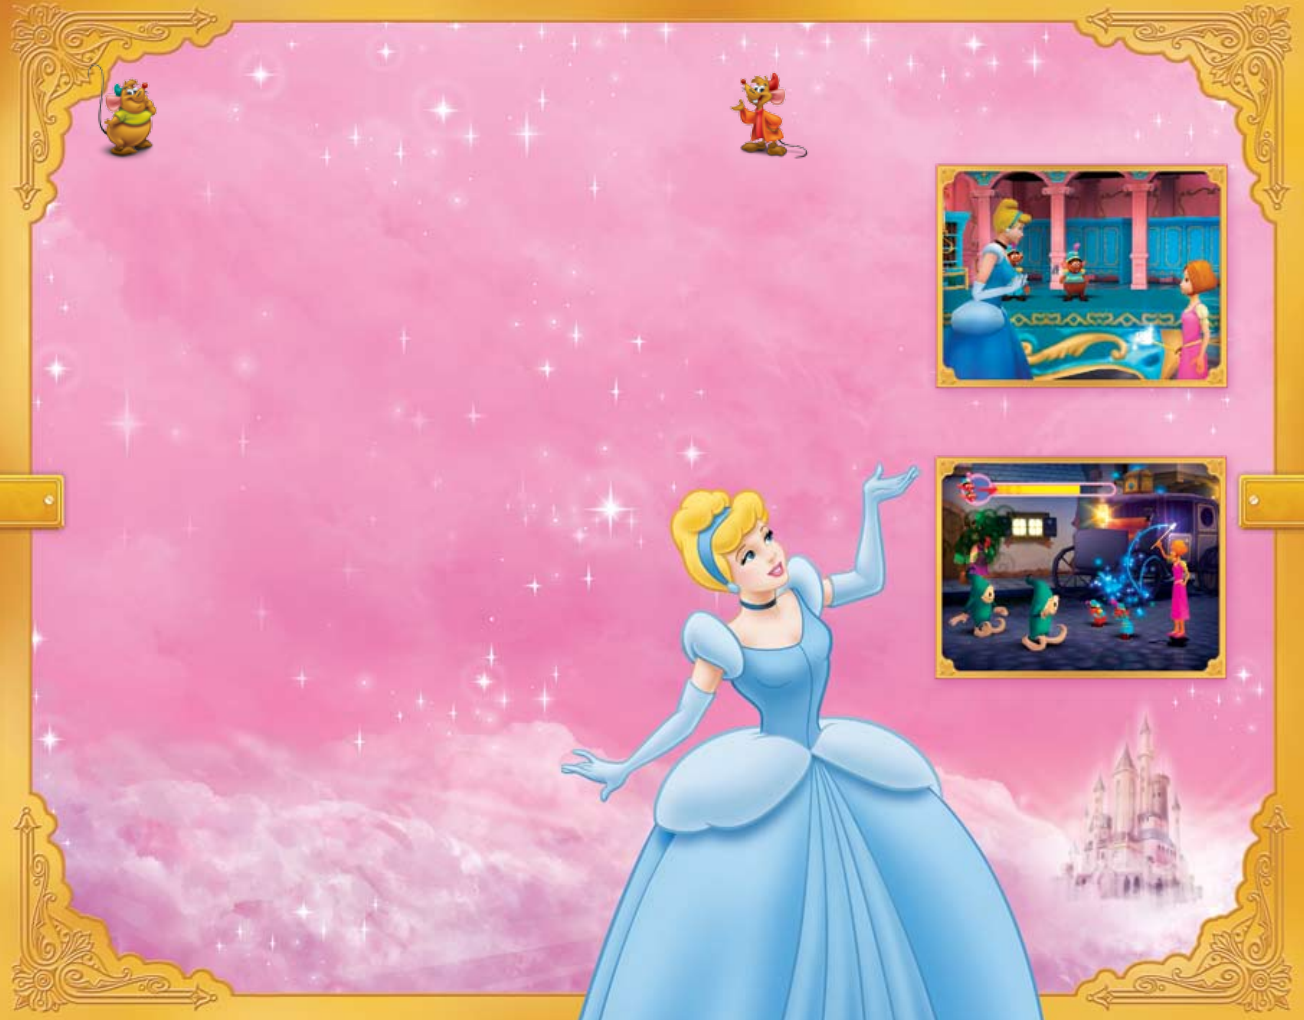 Disney Princess: Enchanted Journey trailer 